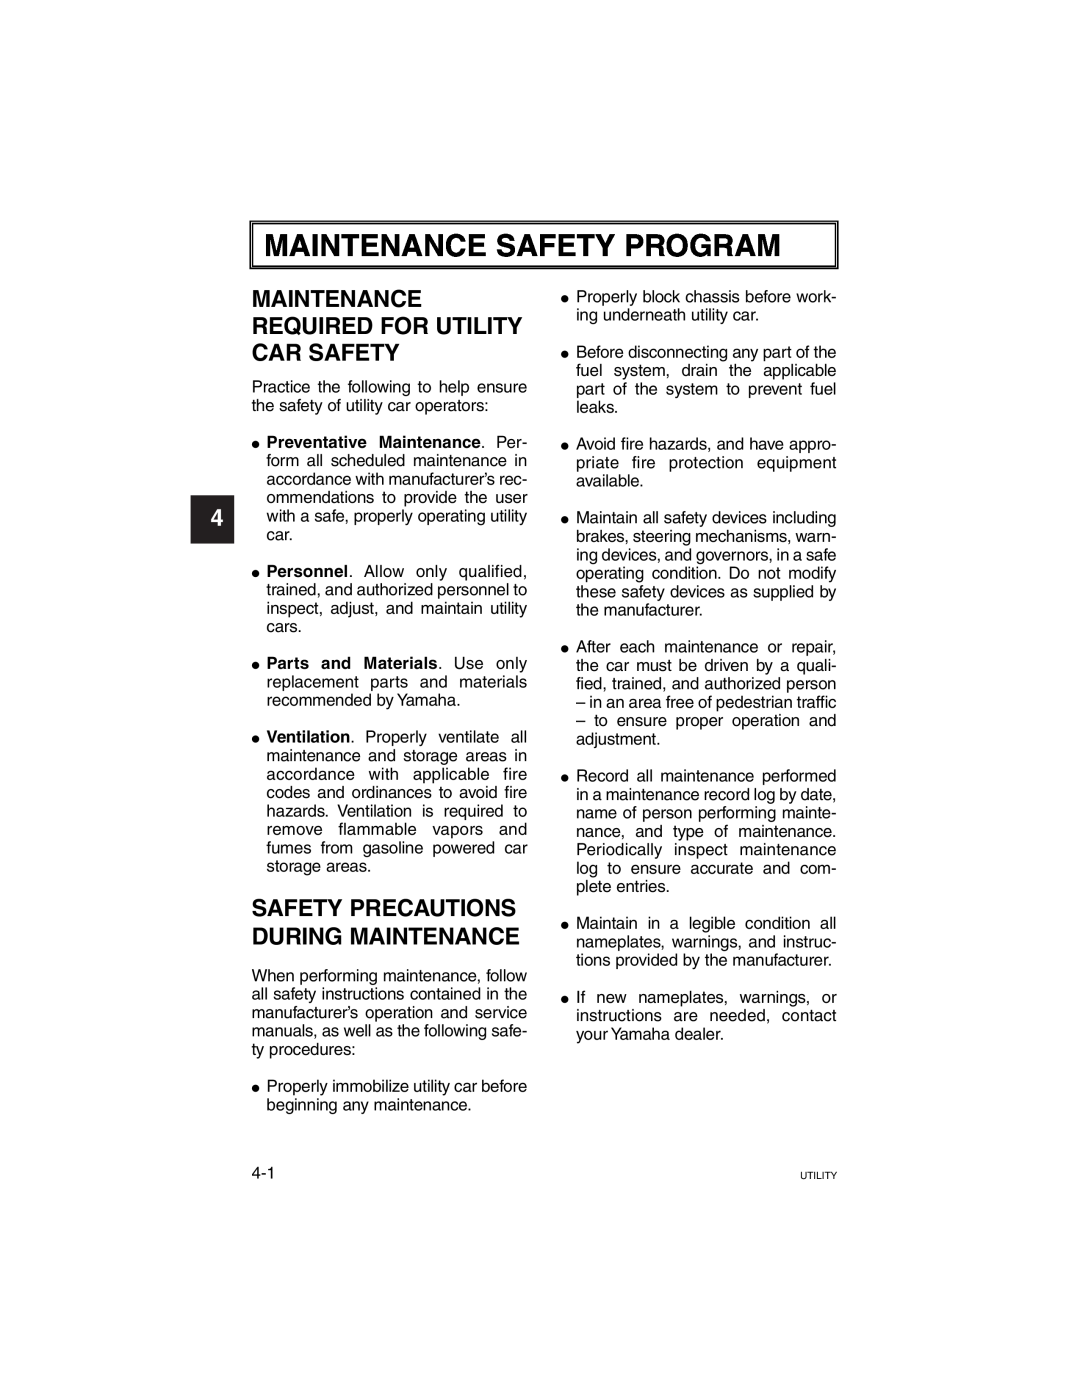 Yamaha G21A manual Maintenance Safety Program, Preventative Maintenance. Per, Parts and, Materials, Ventilation 